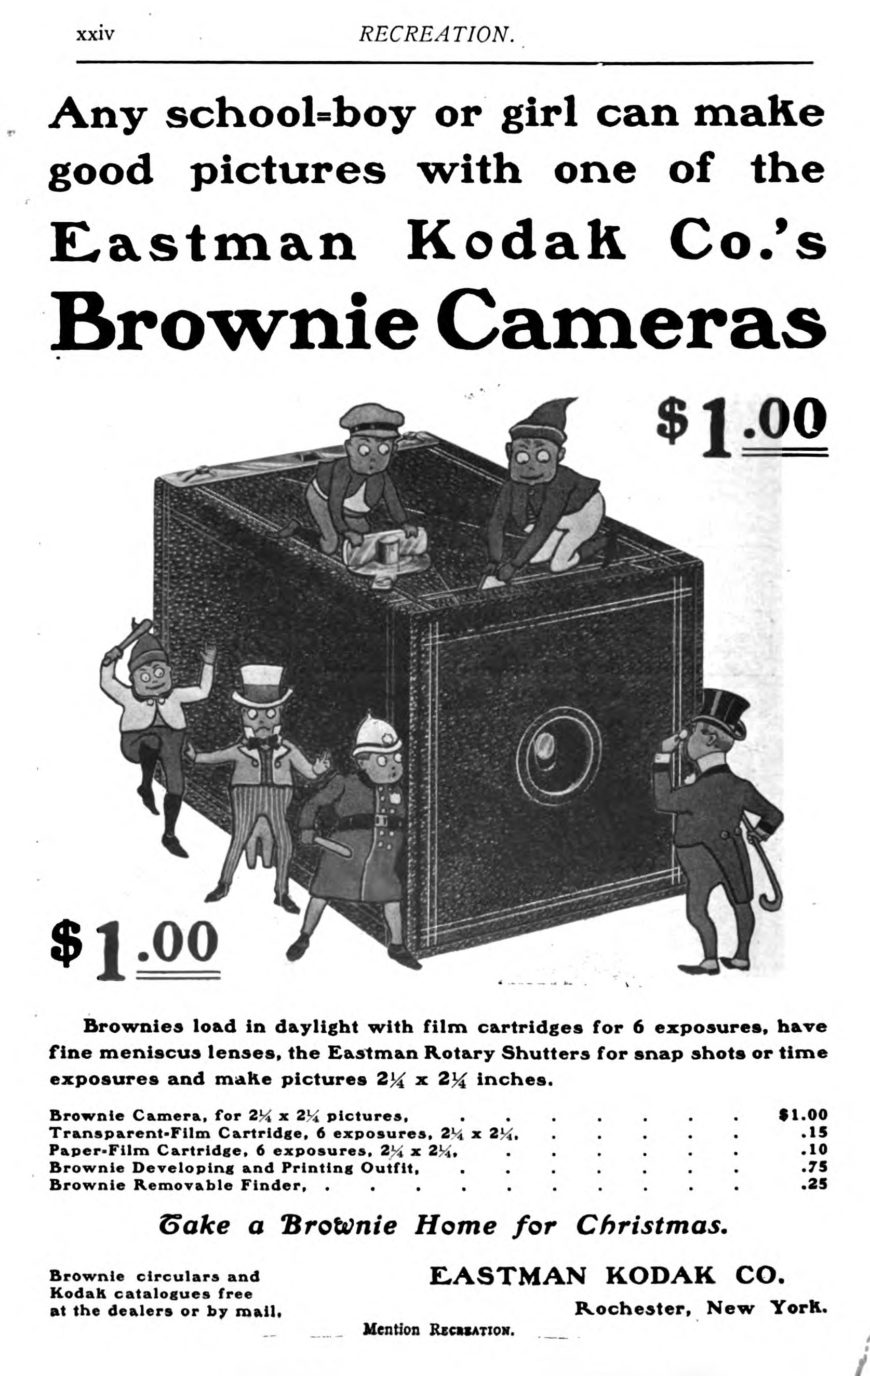 Eastman Kodak Advertisement for the Brownie Camera, Recreation 13 (1900): p. xxiv (New York Public Library)